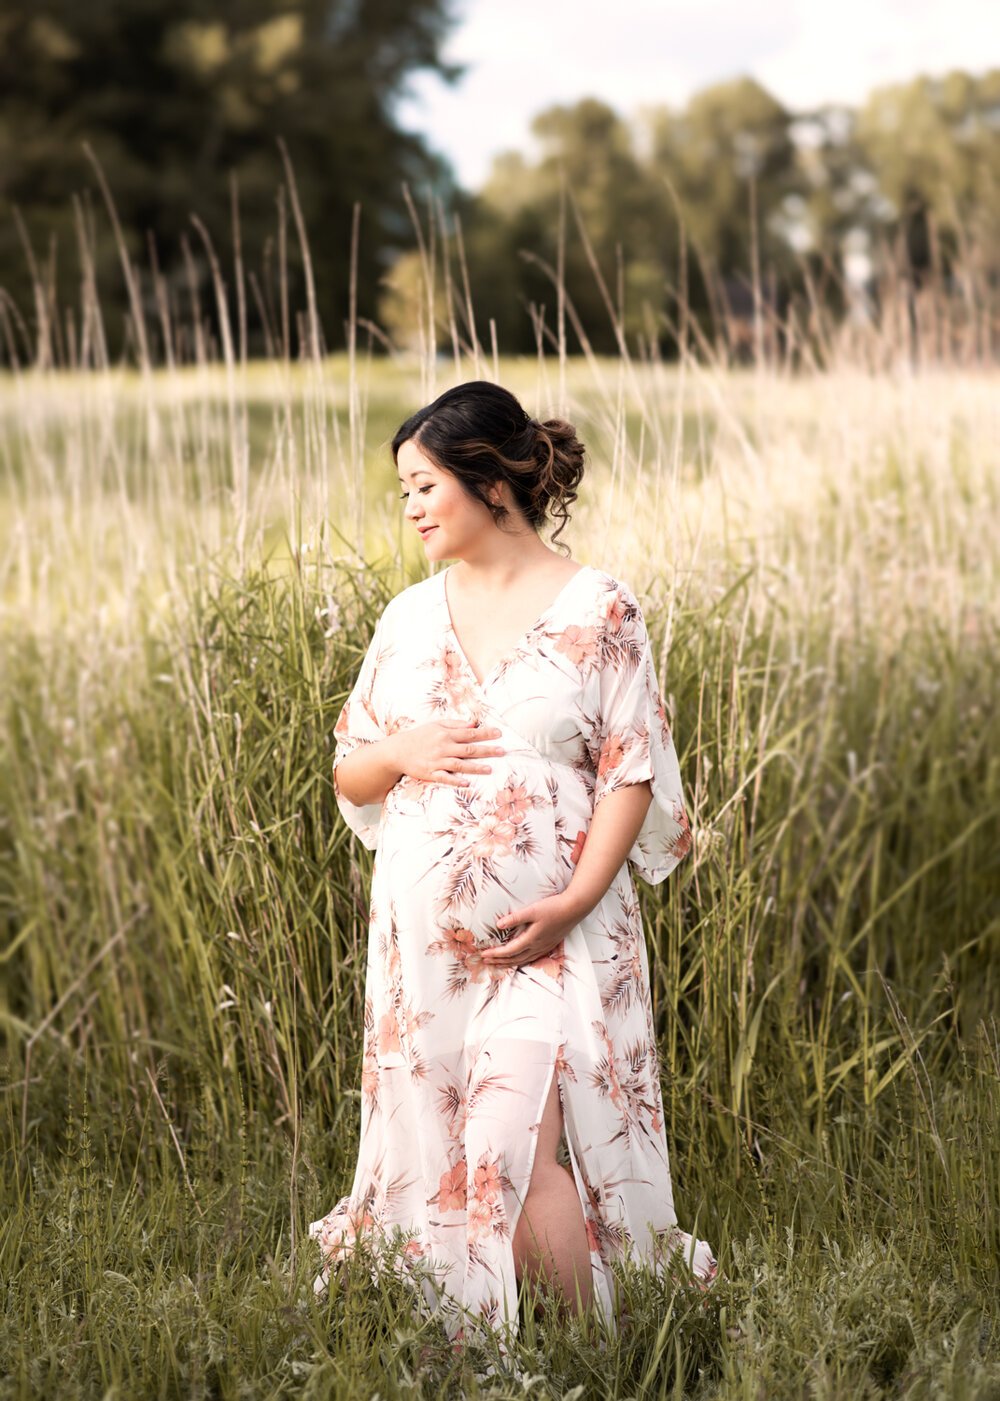 Maternity Session In Grassy Field 